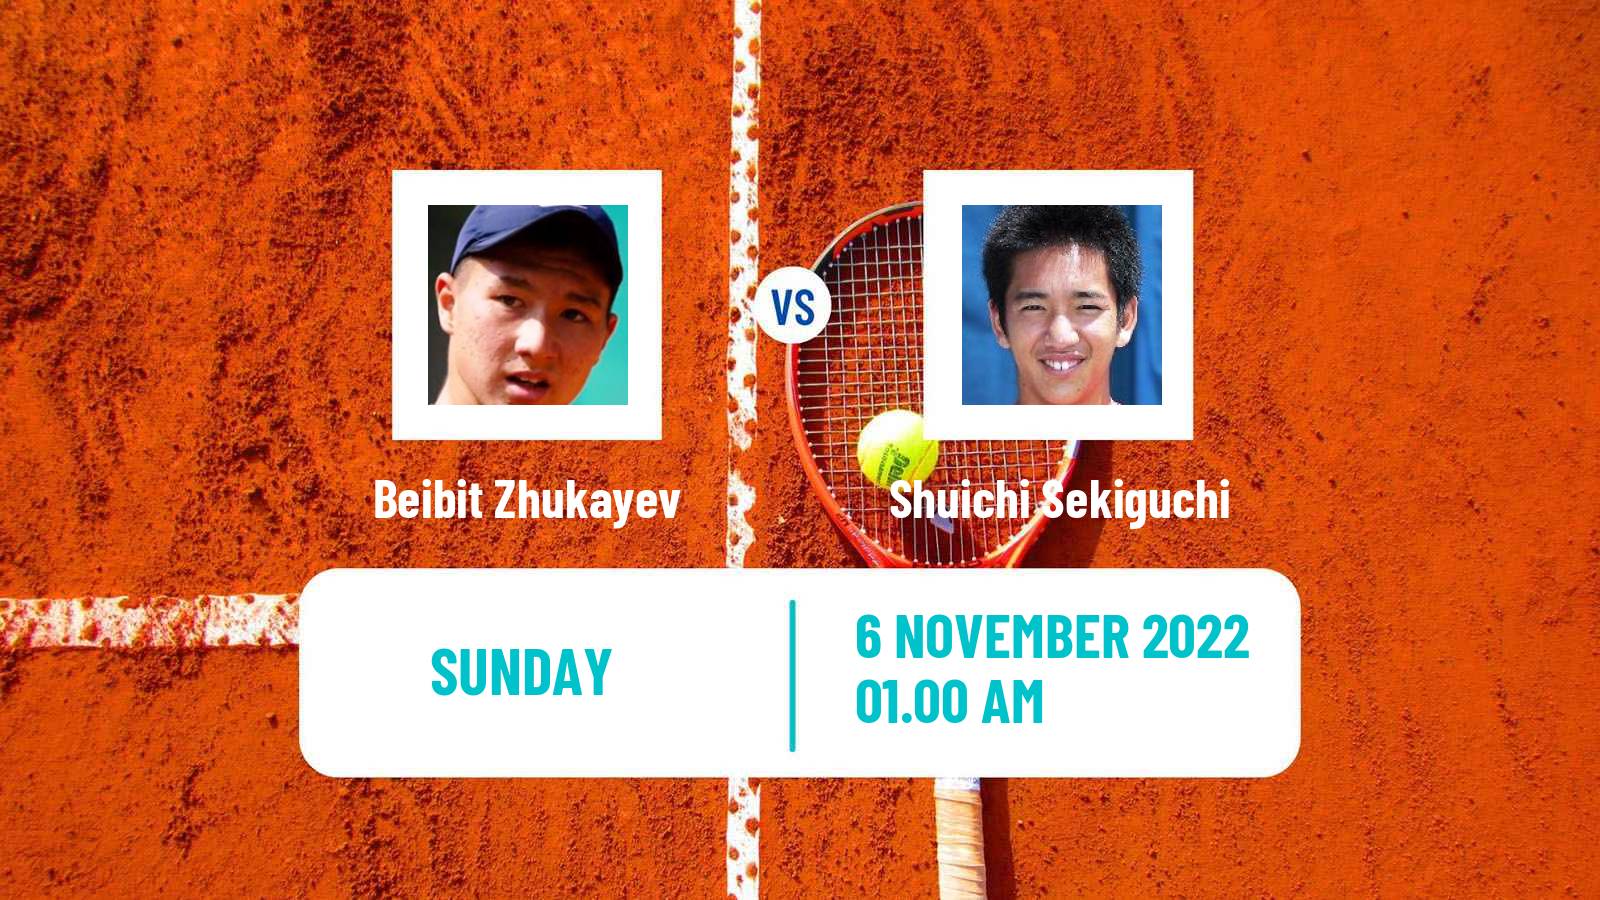 Tennis ATP Challenger Beibit Zhukayev - Shuichi Sekiguchi